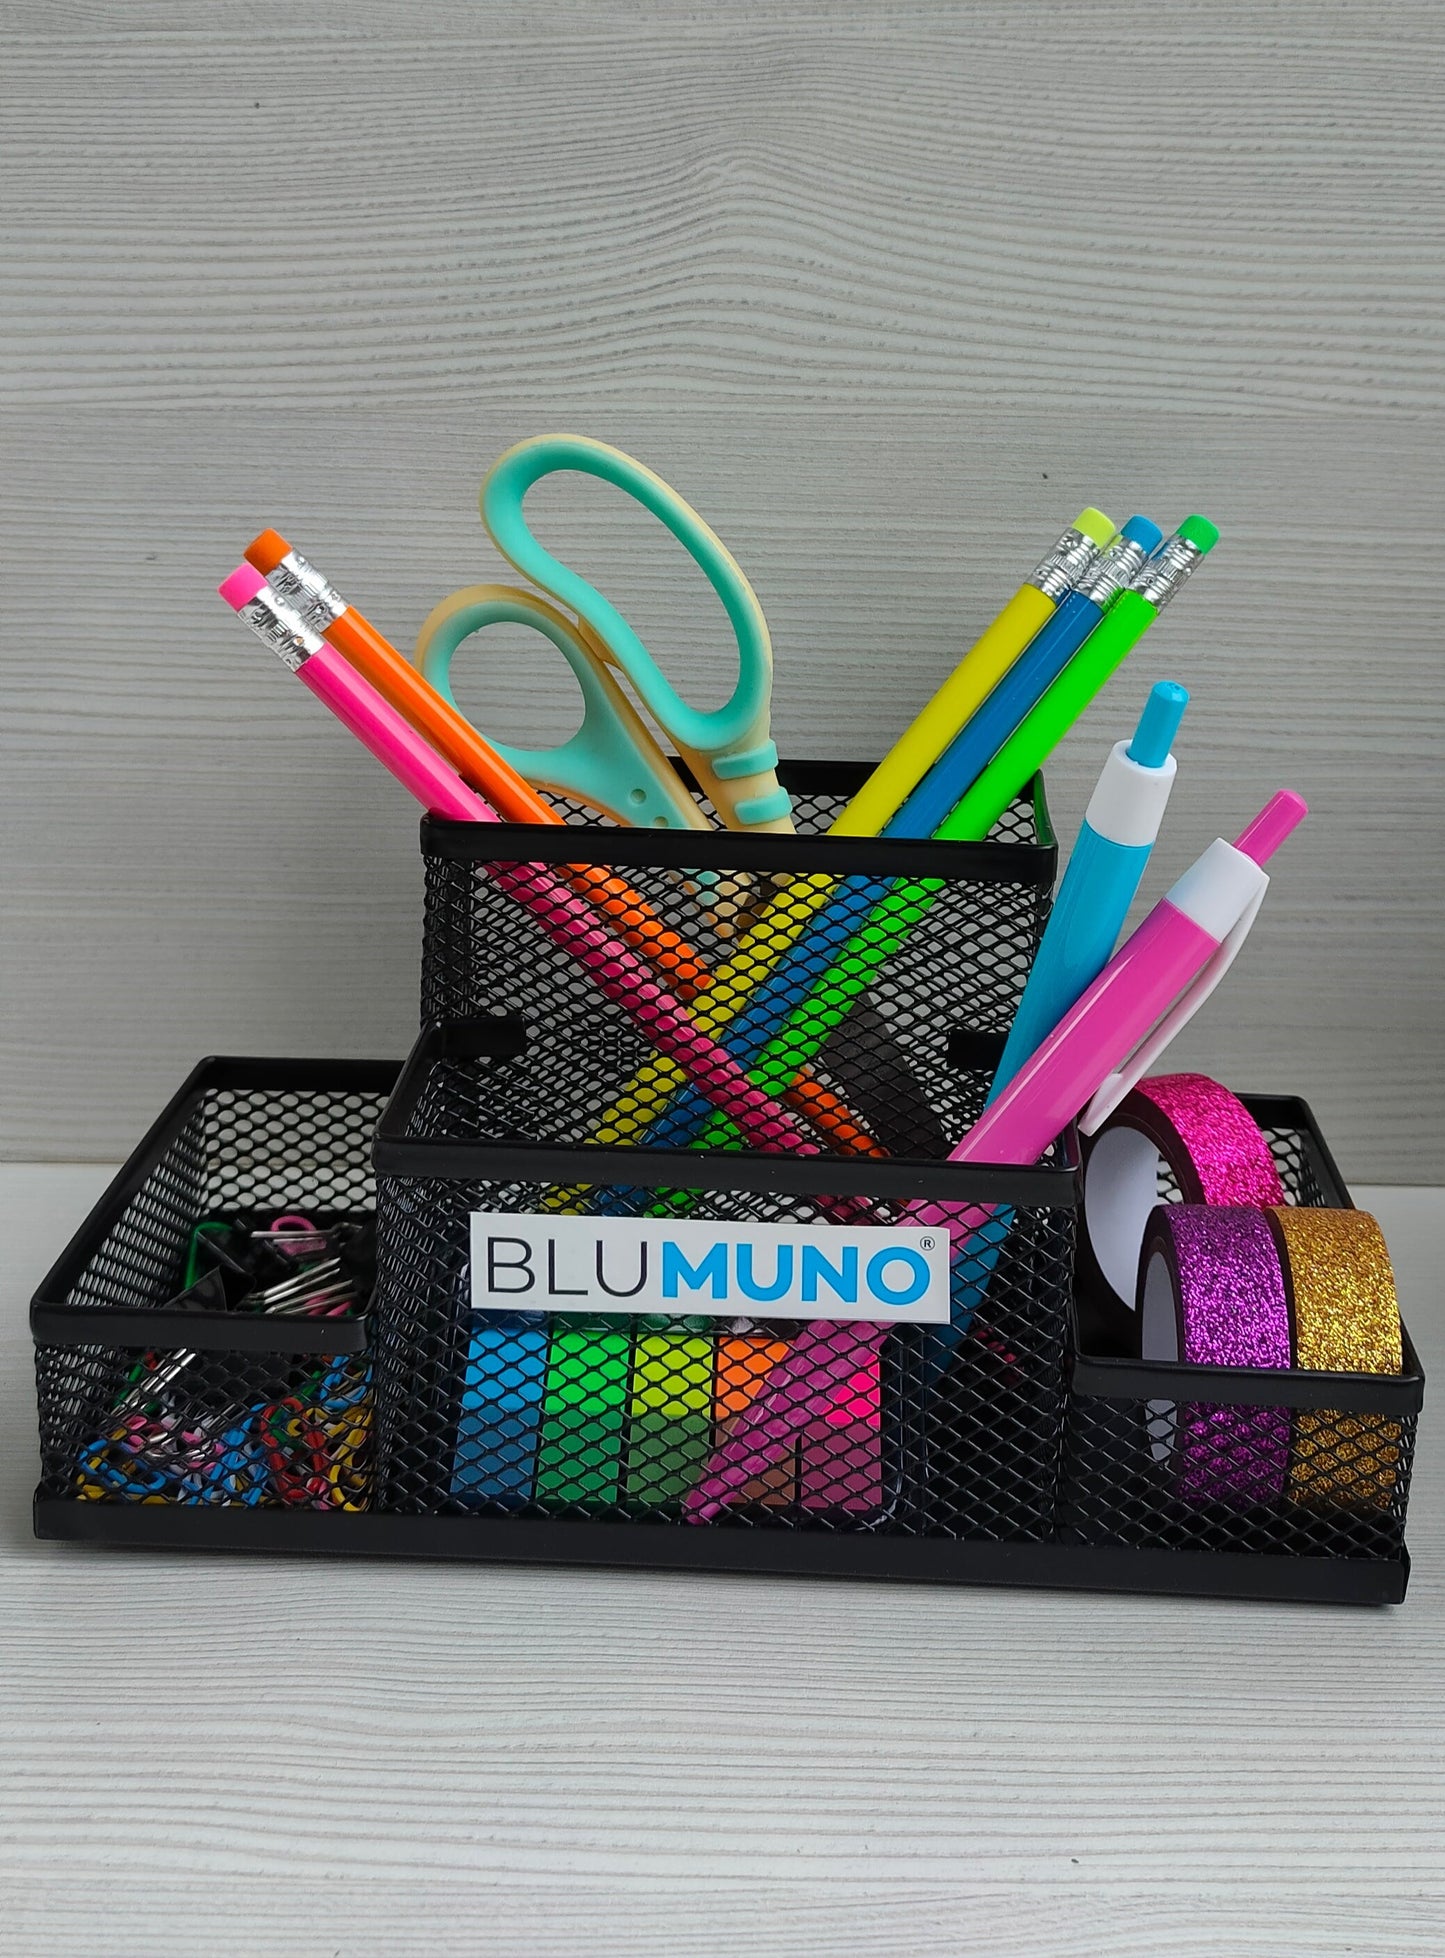 Blumuno Ampio Desk Organizer (4 Compartment)